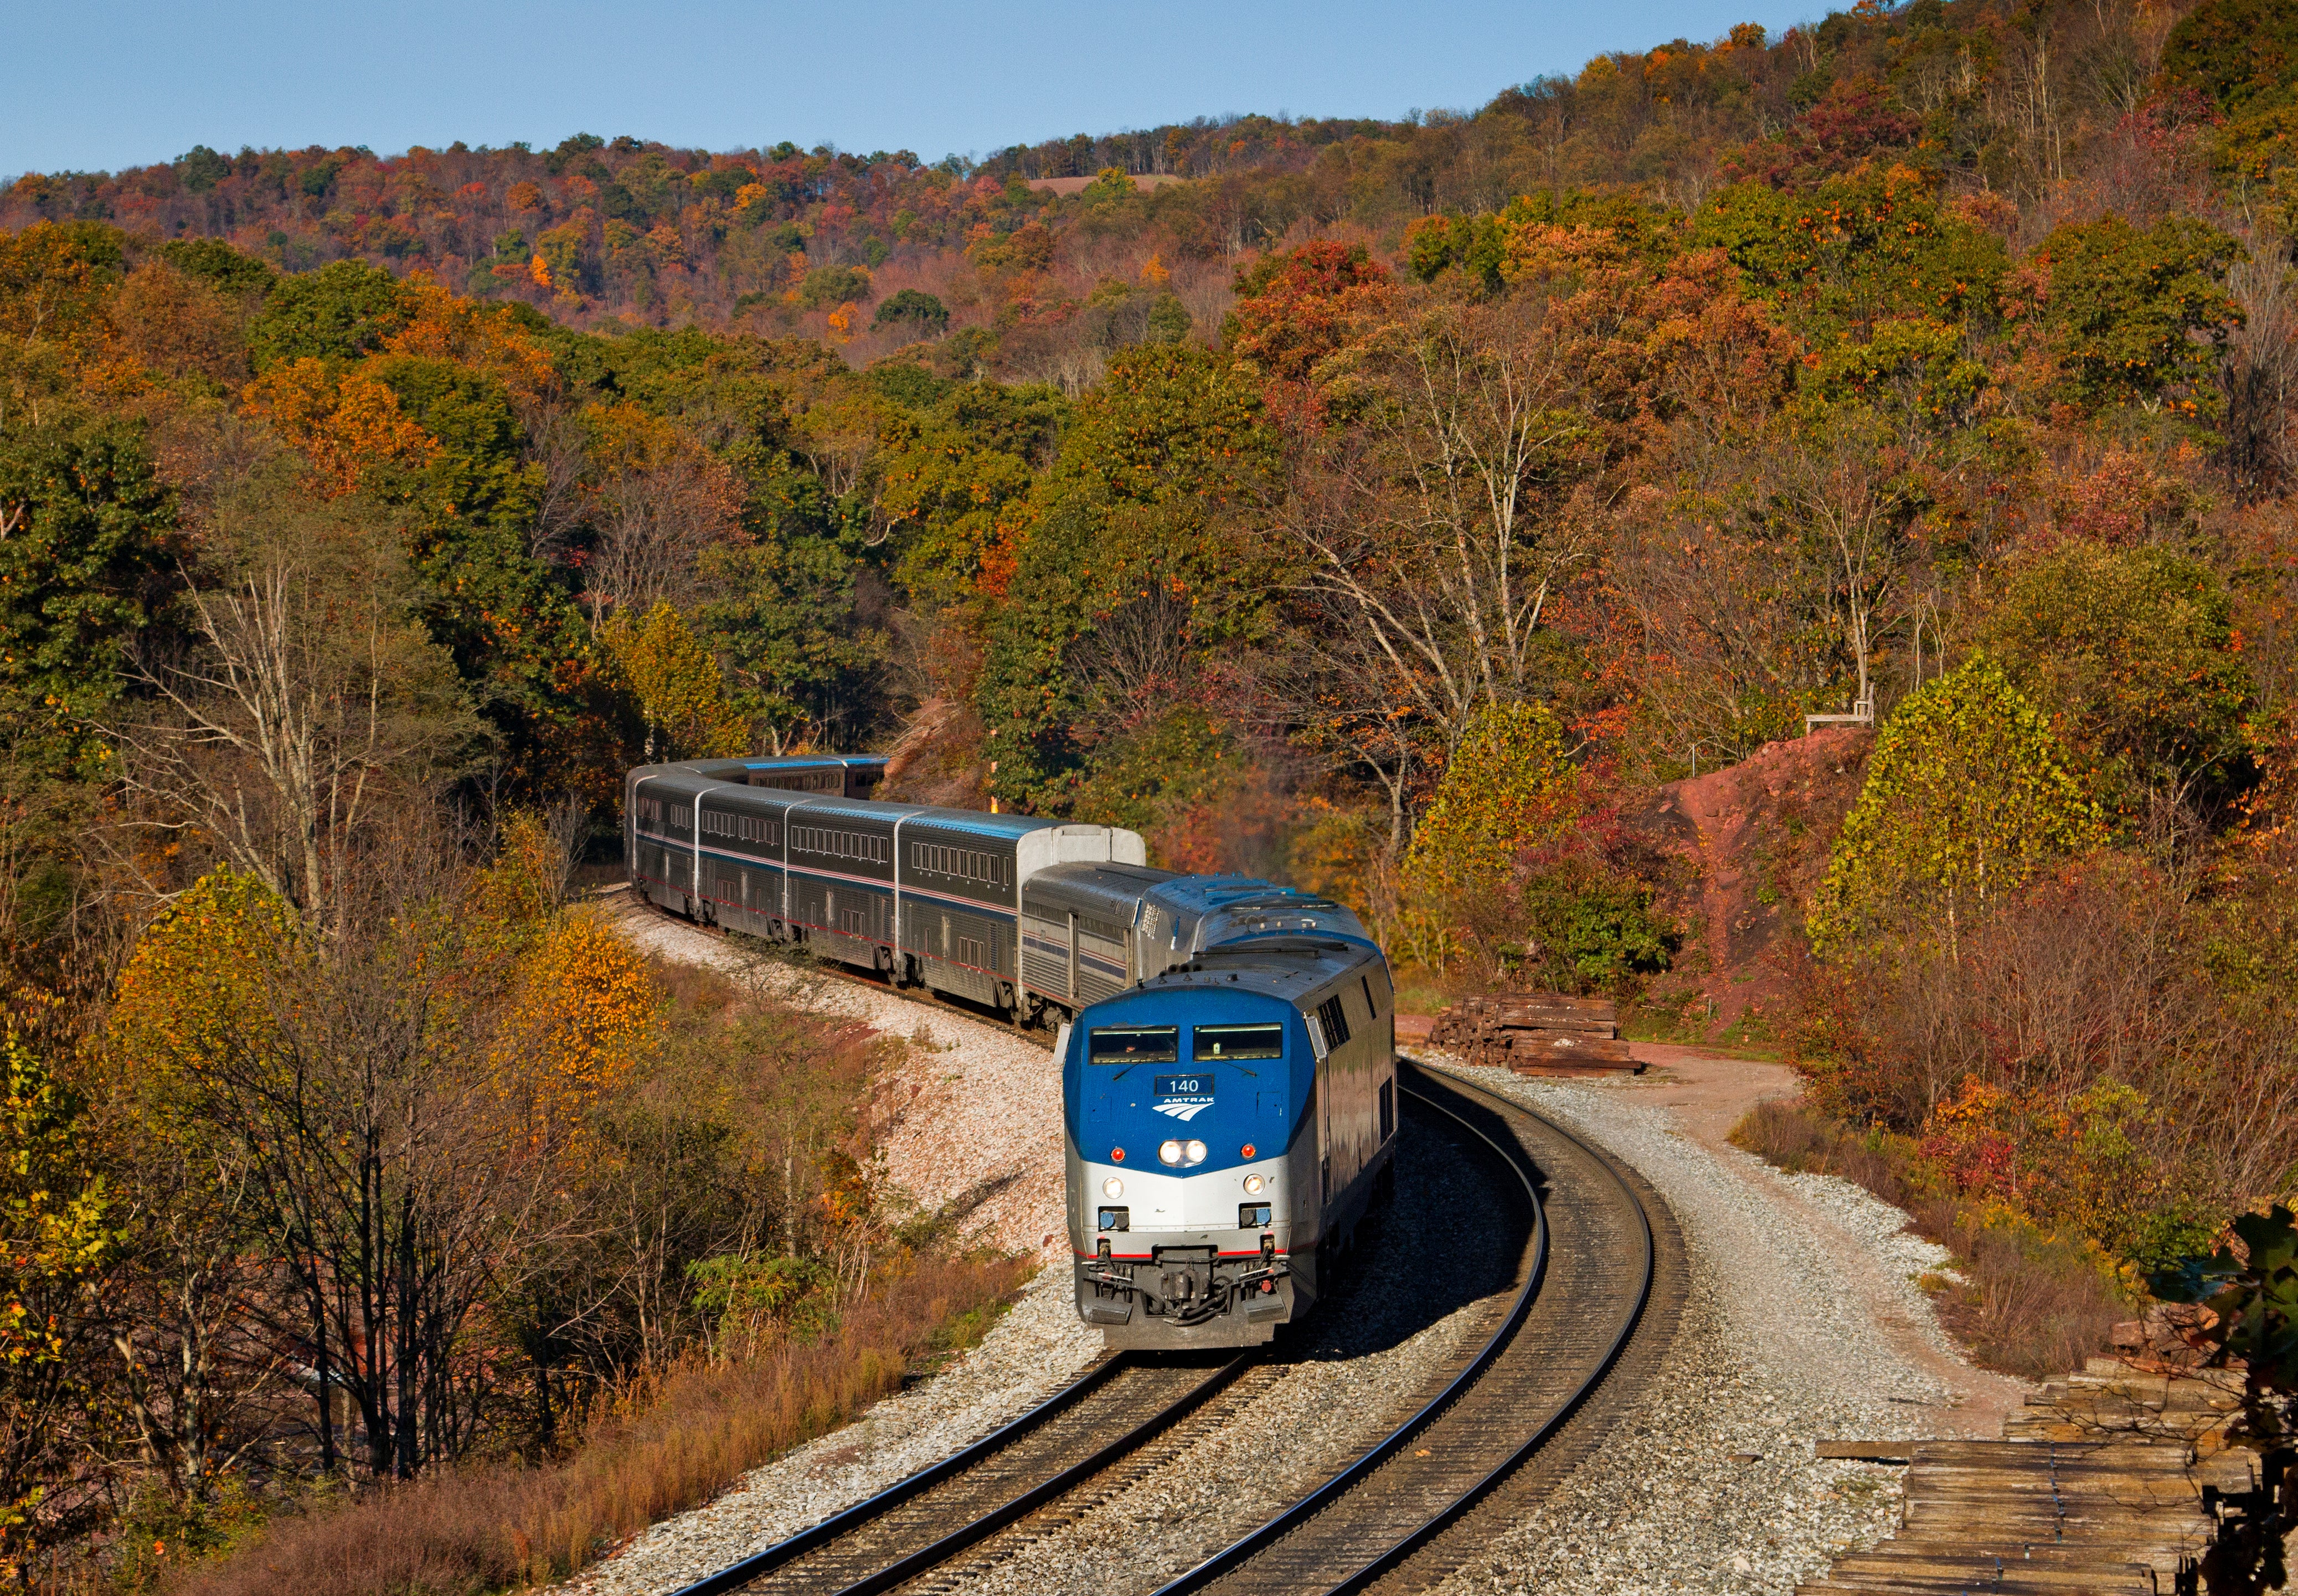 Amtrak turns 50 this year